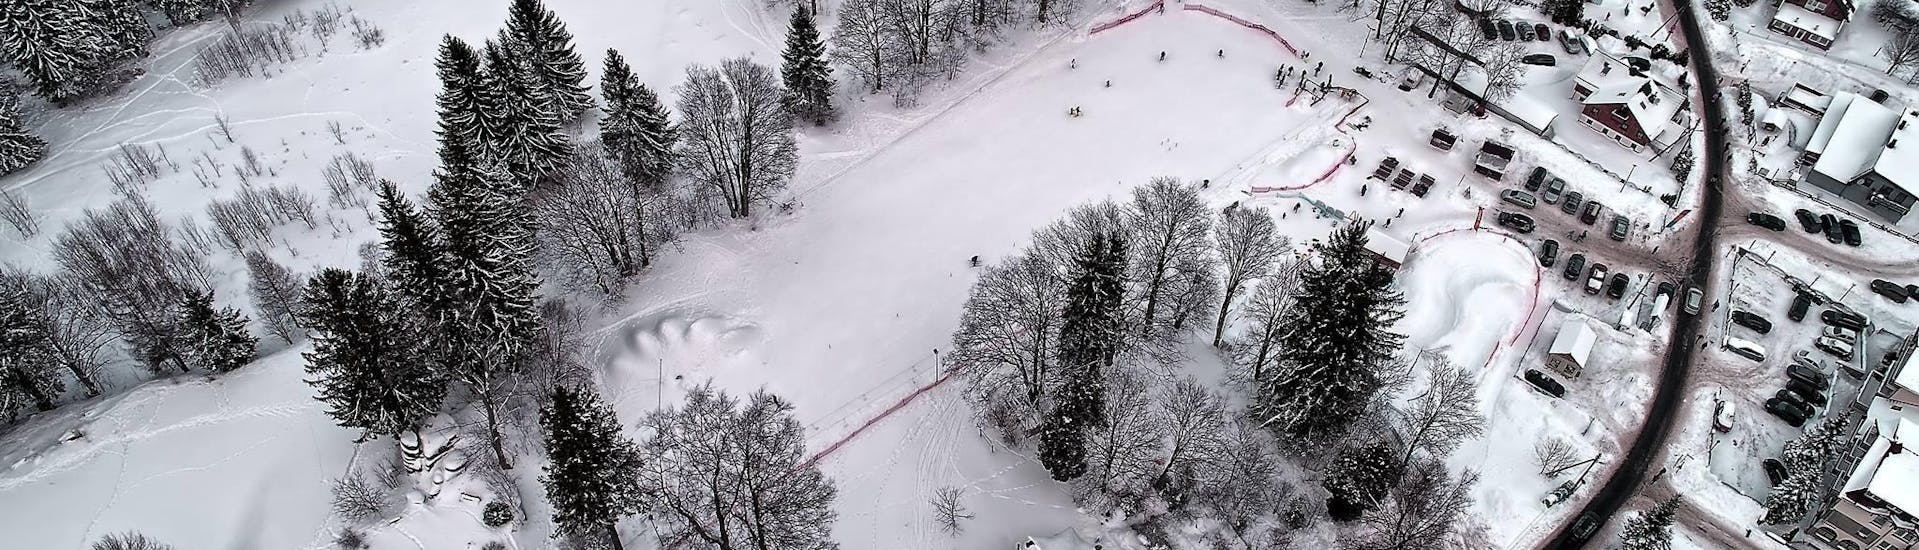 Clases de esquí para niños para principiantes.